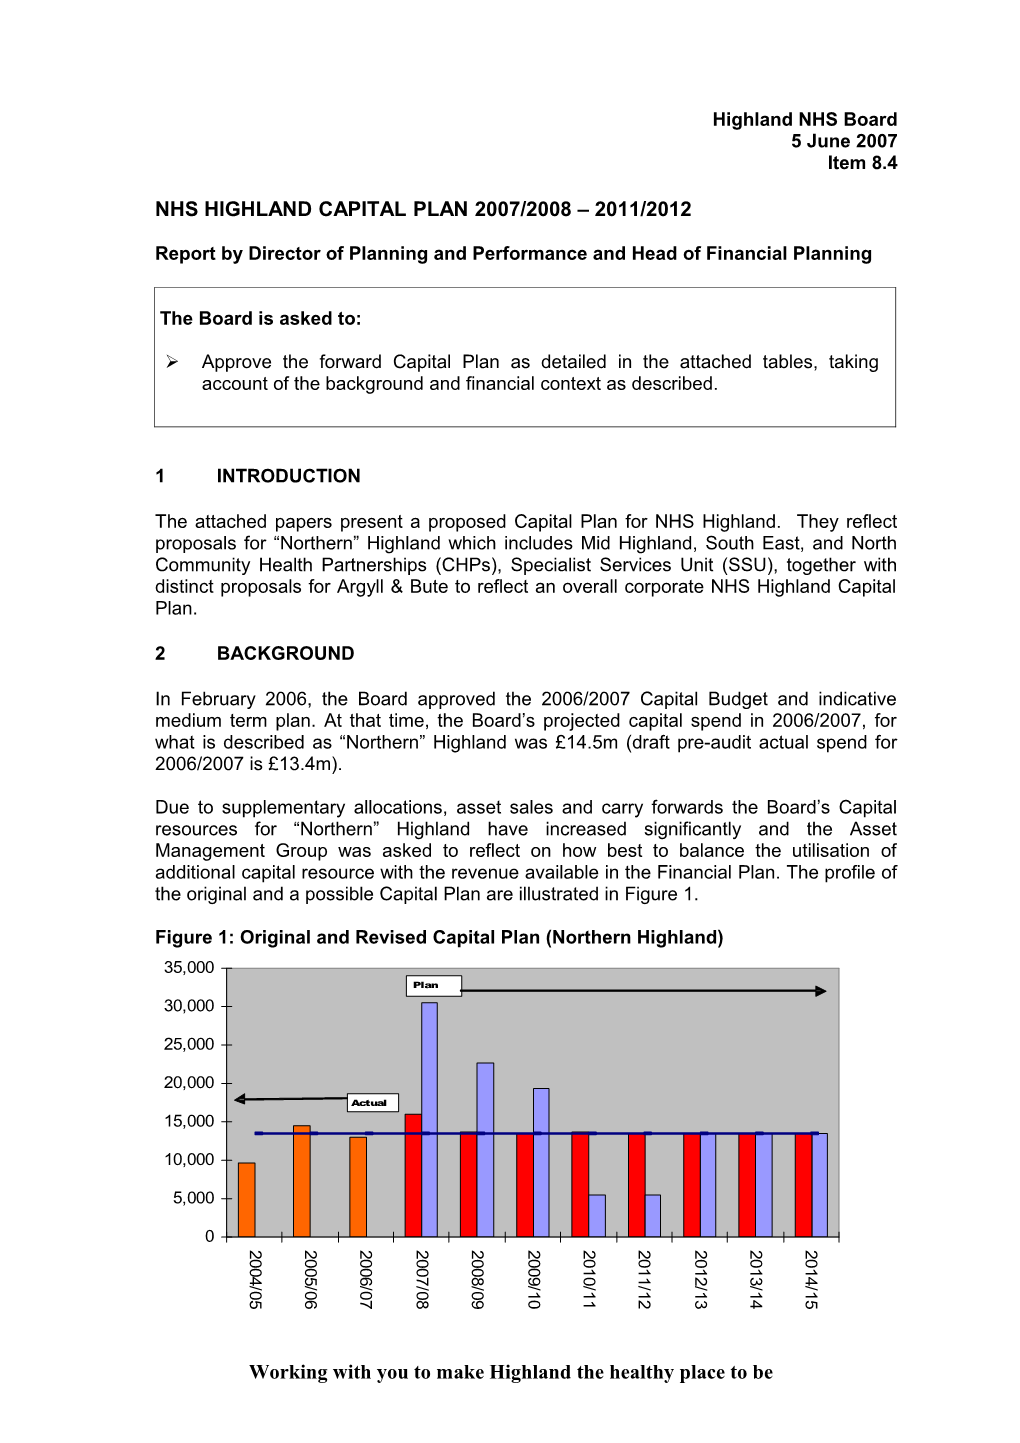 Nhs Highland Capital Plan 2007/2008 2011/2012